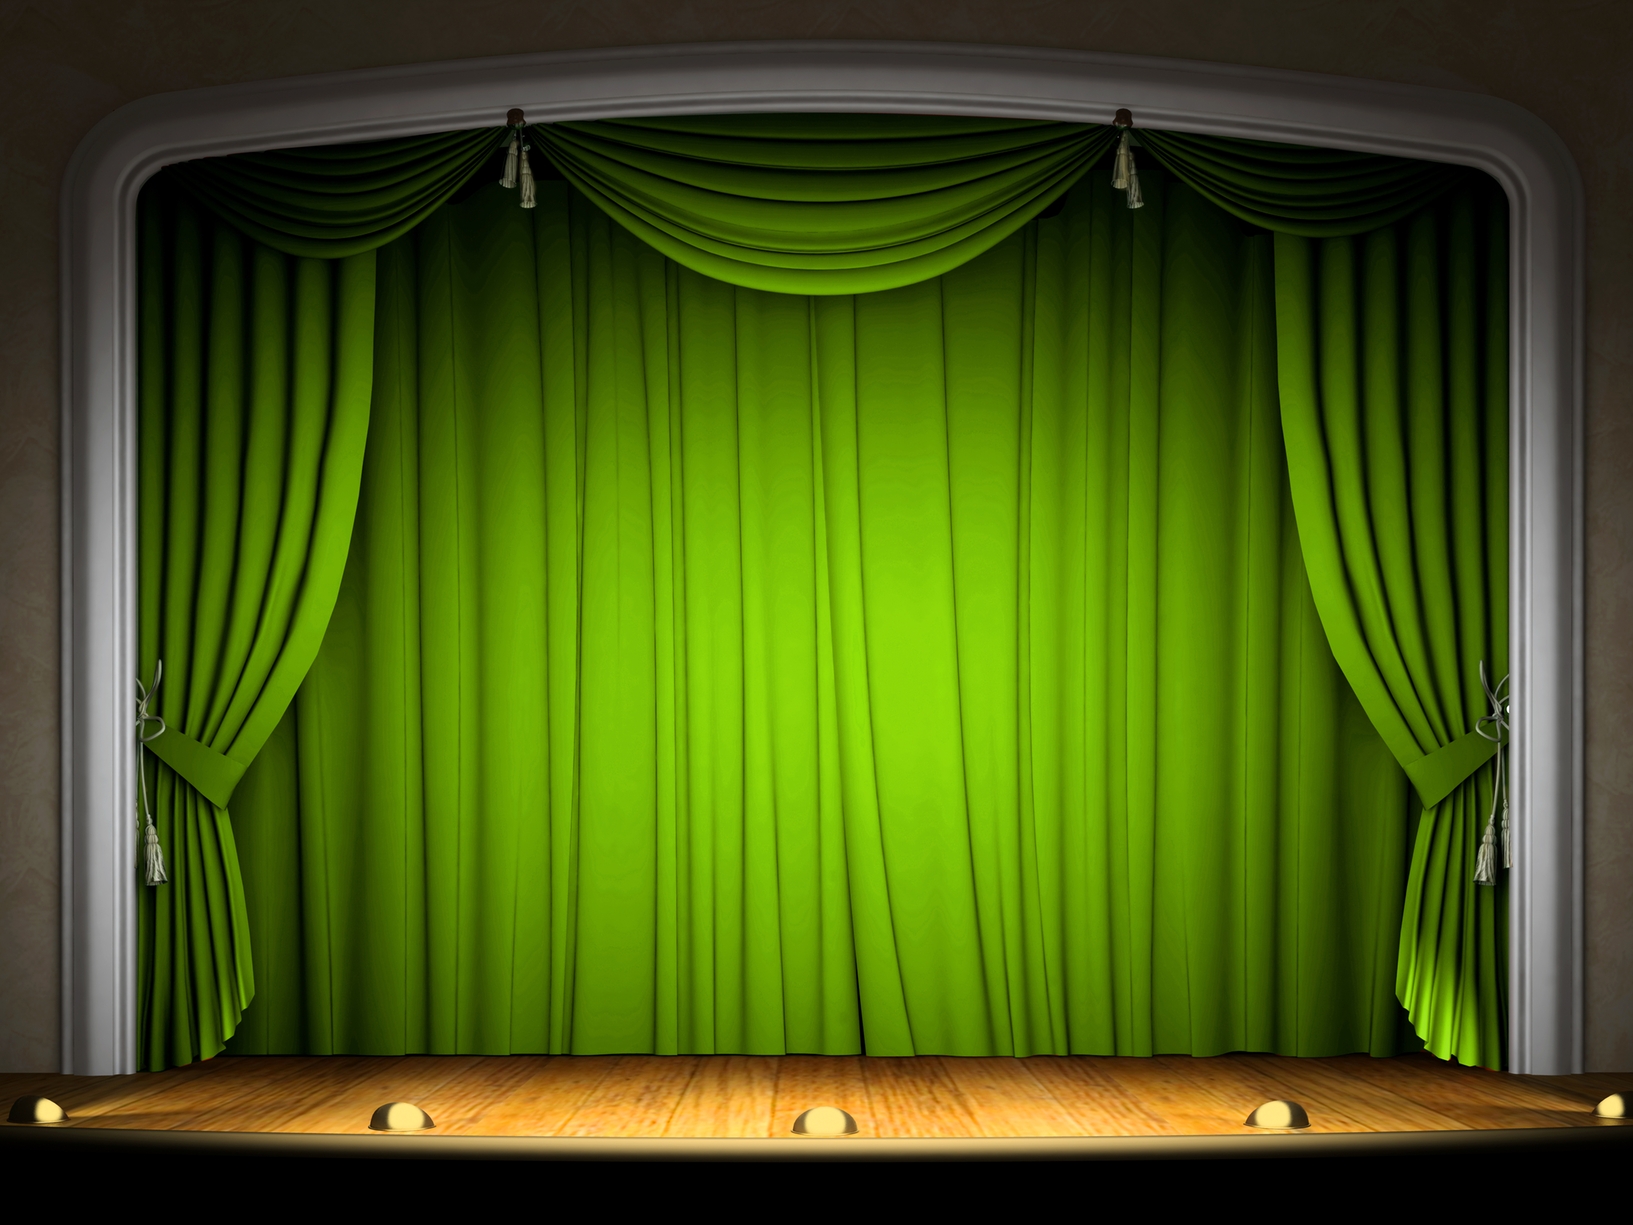 theatre clipart green curtain